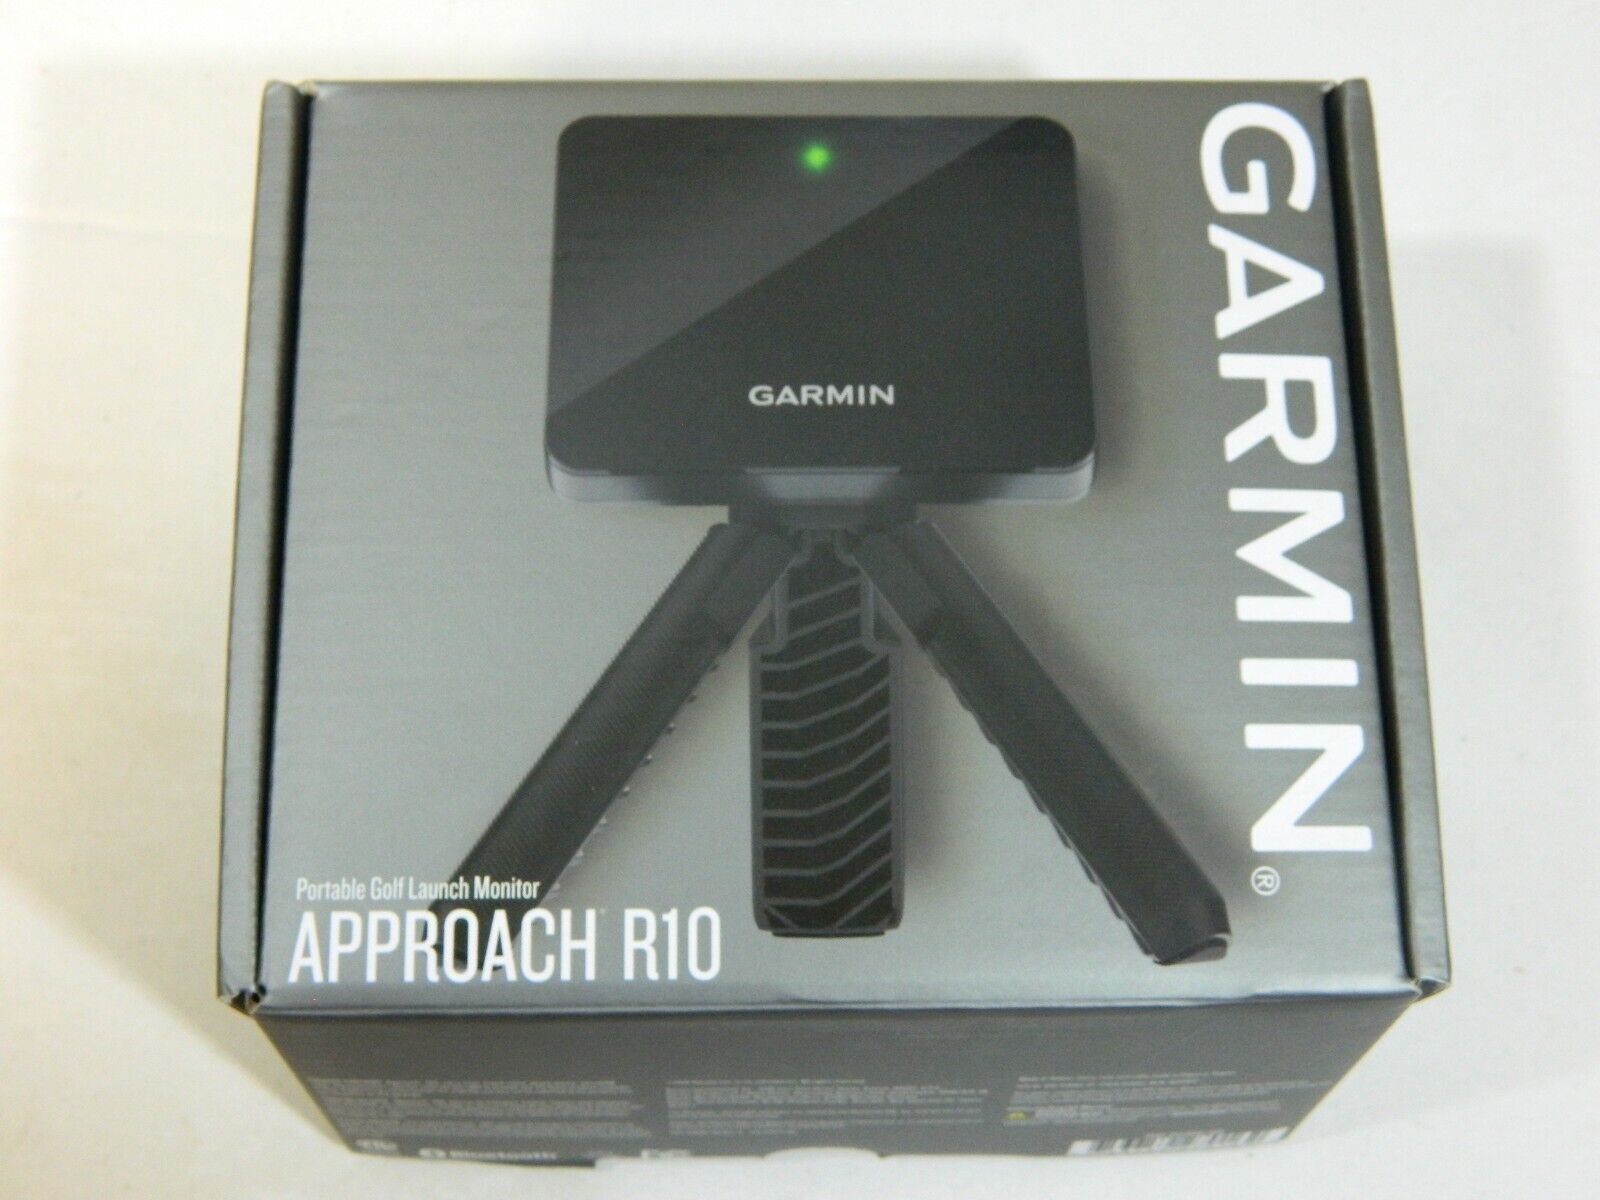 Garmin Approach R10 Portable Golf Launch Monitor R 10 Indoor / Outdoor Simulator